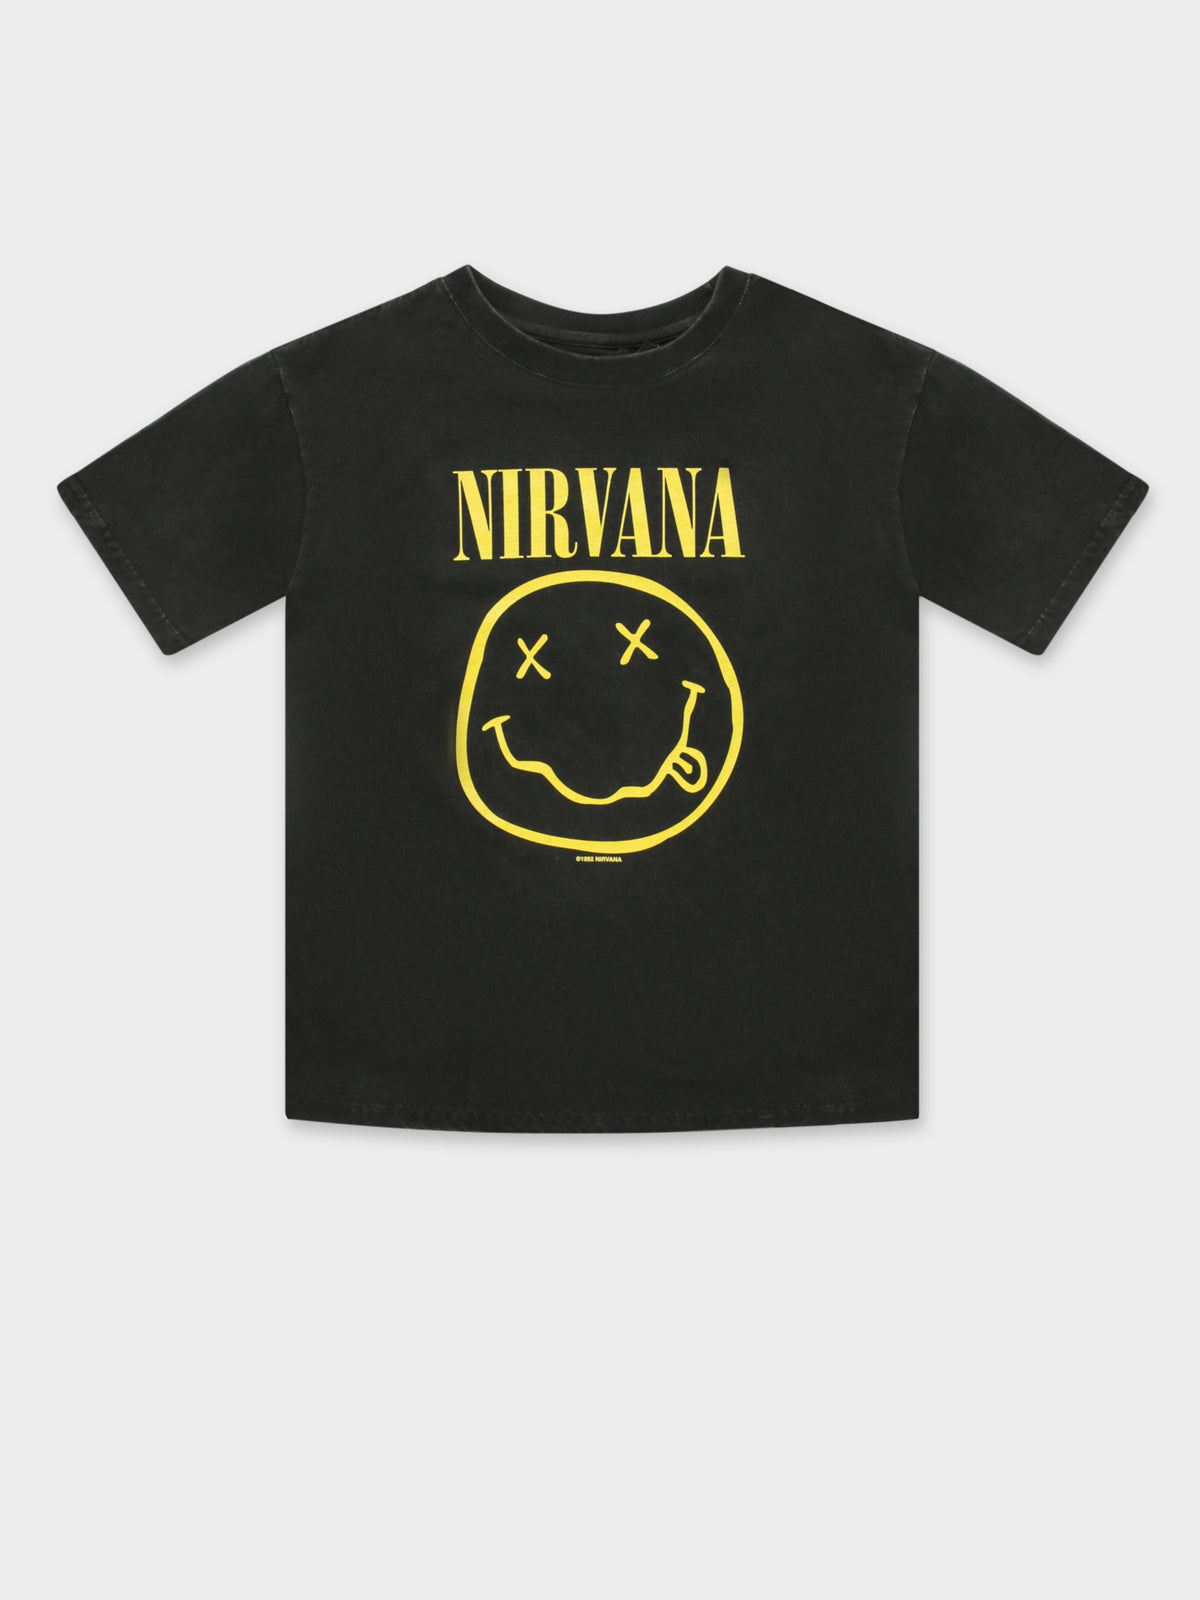 Nirvana Kissin T-Shirt in Washed Black